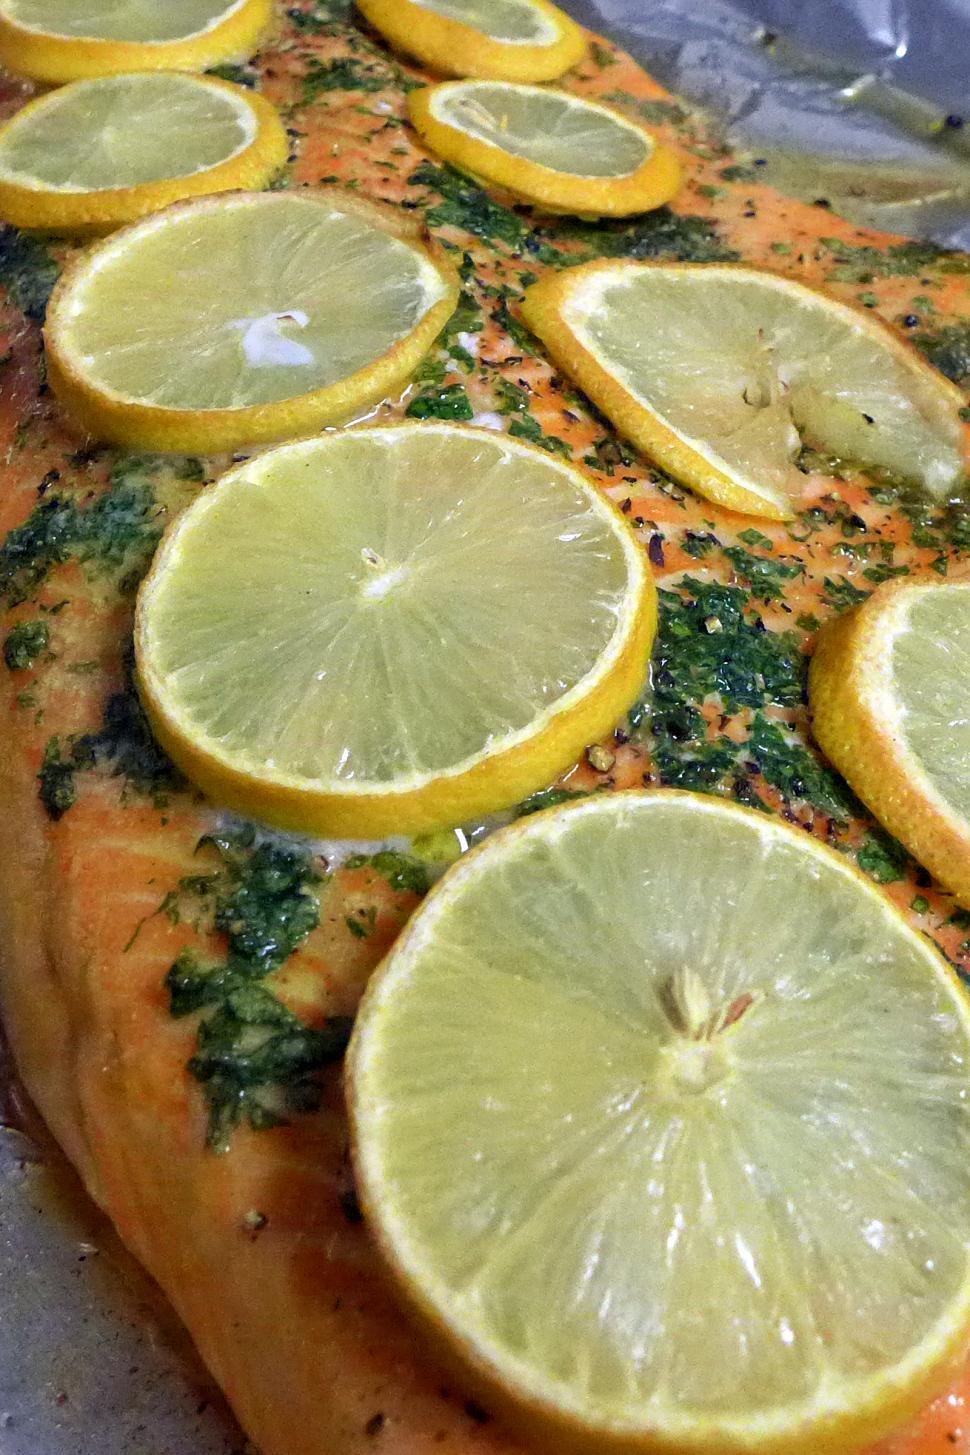 Free Image of Baked Salmon With Lemon 